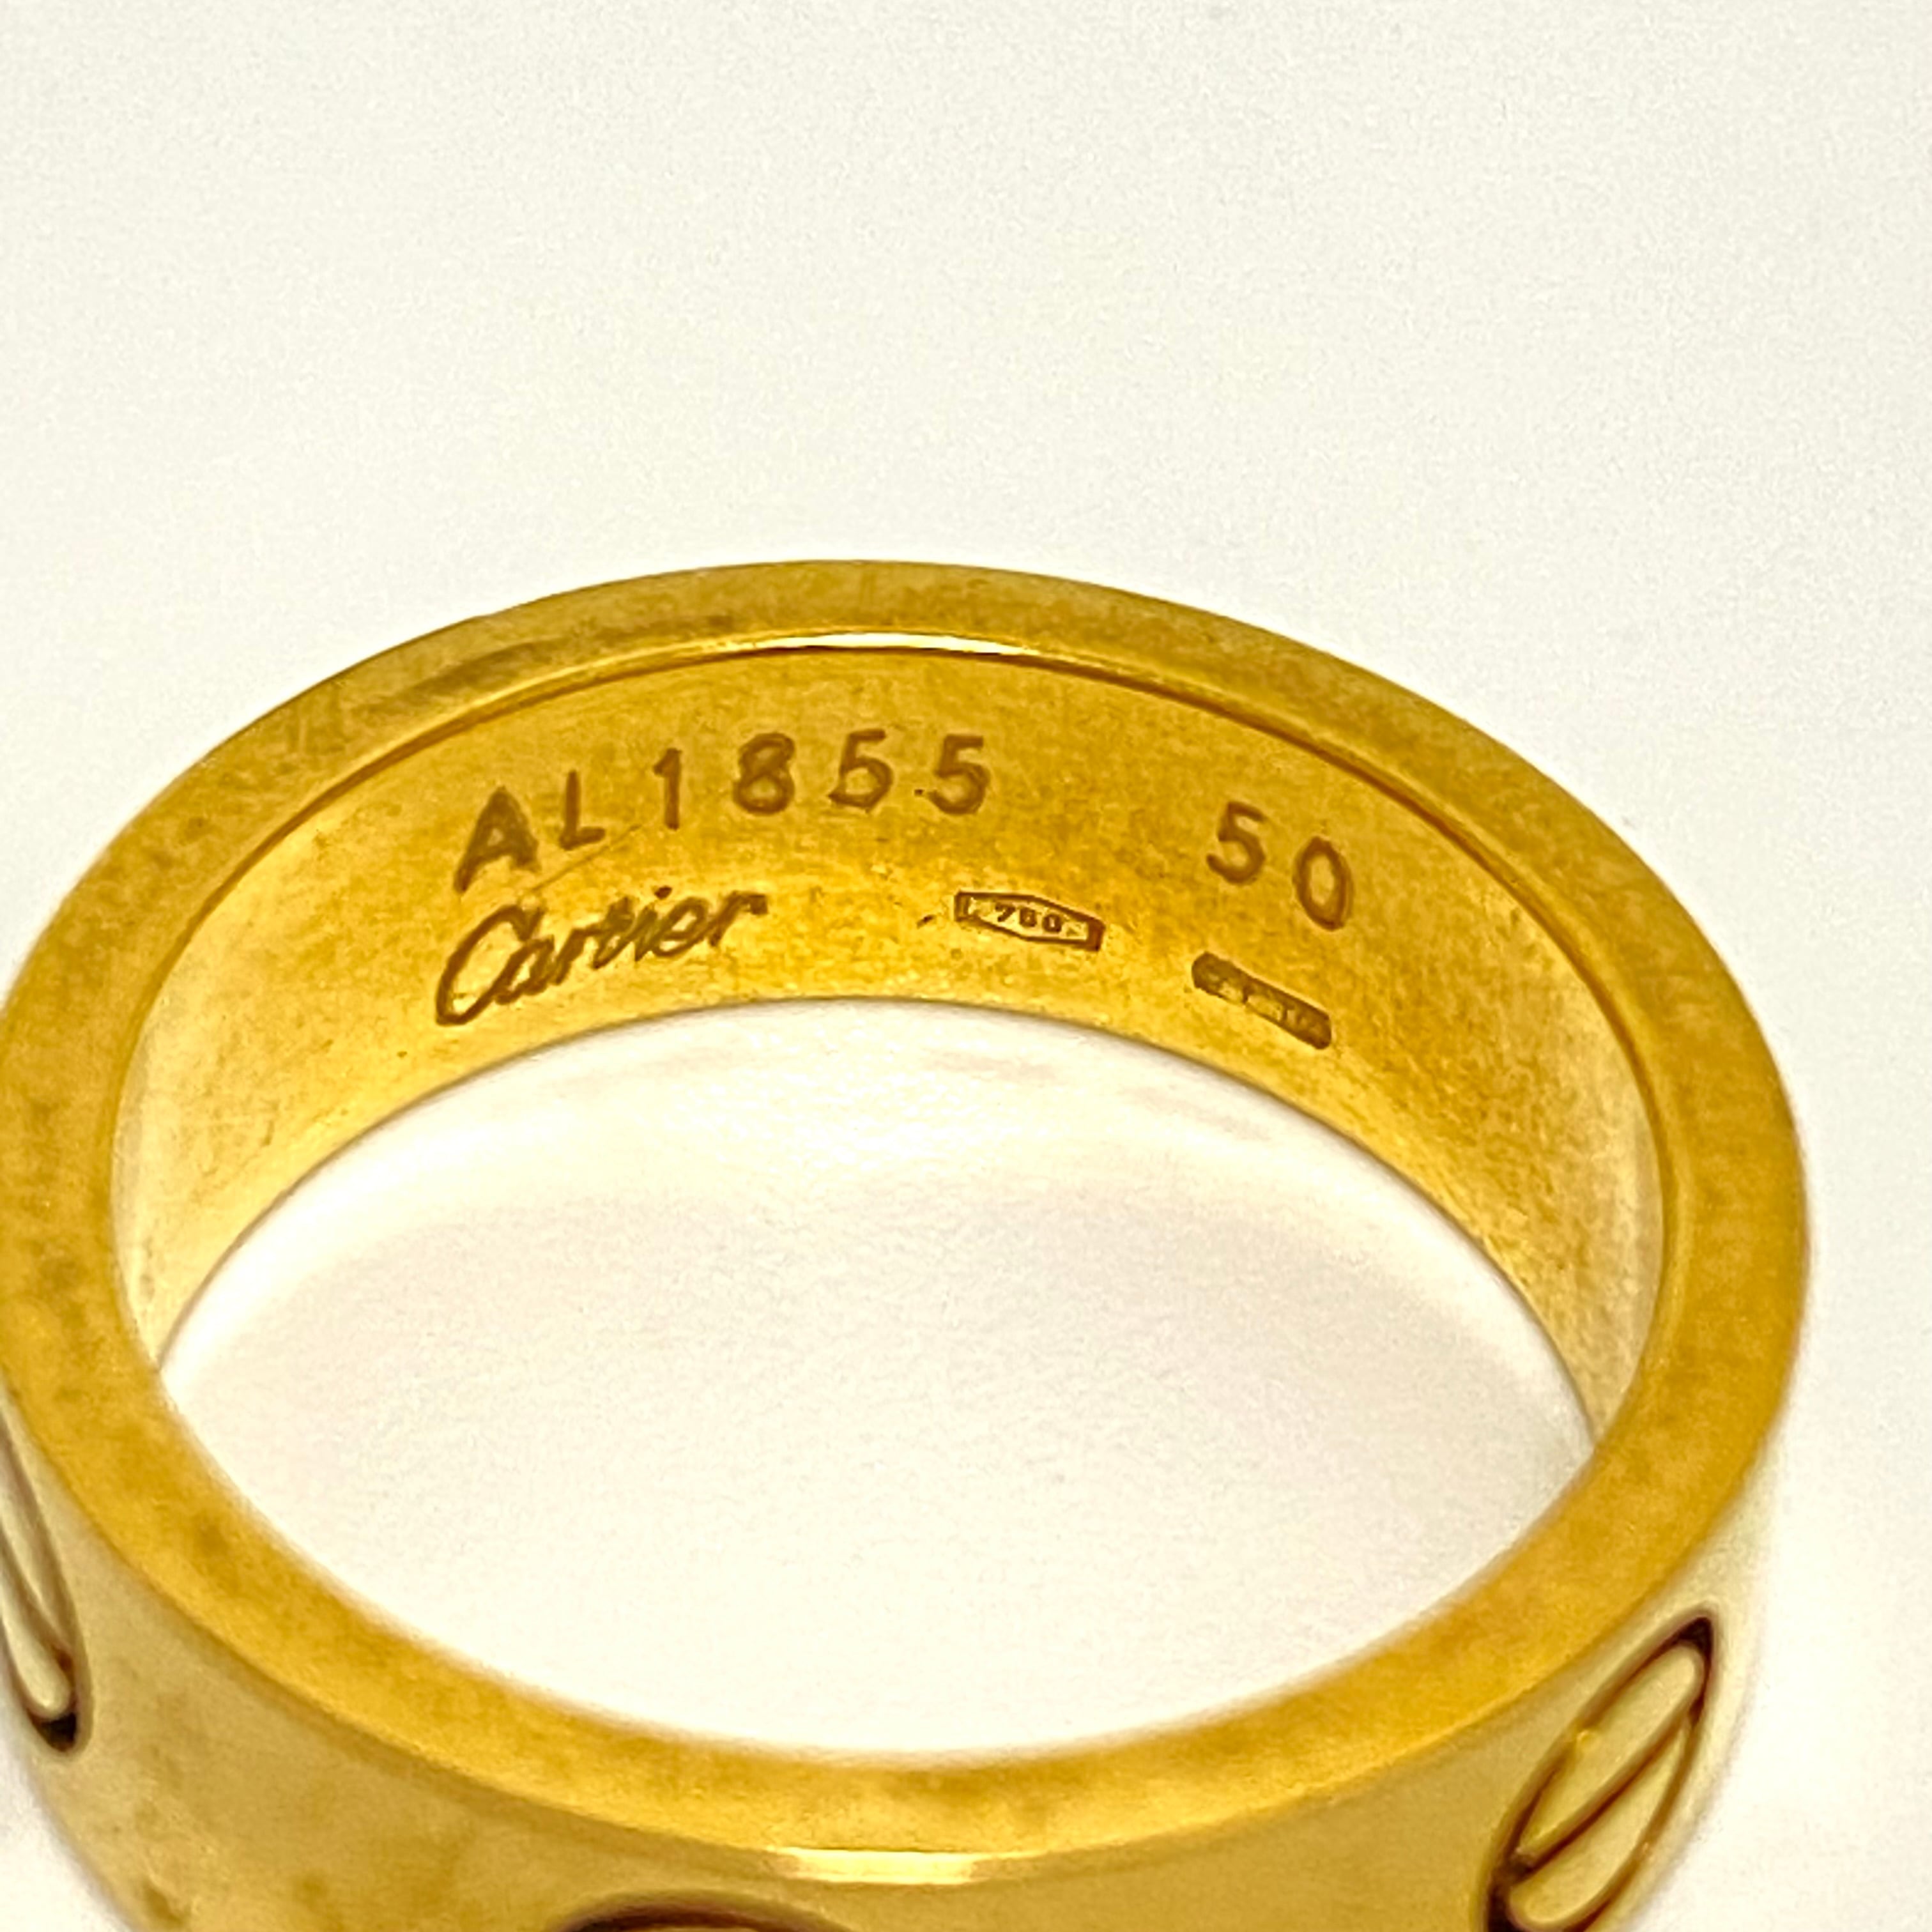 Cartier カルティエ ミニラブリング YG イエローゴールド #50 指輪 